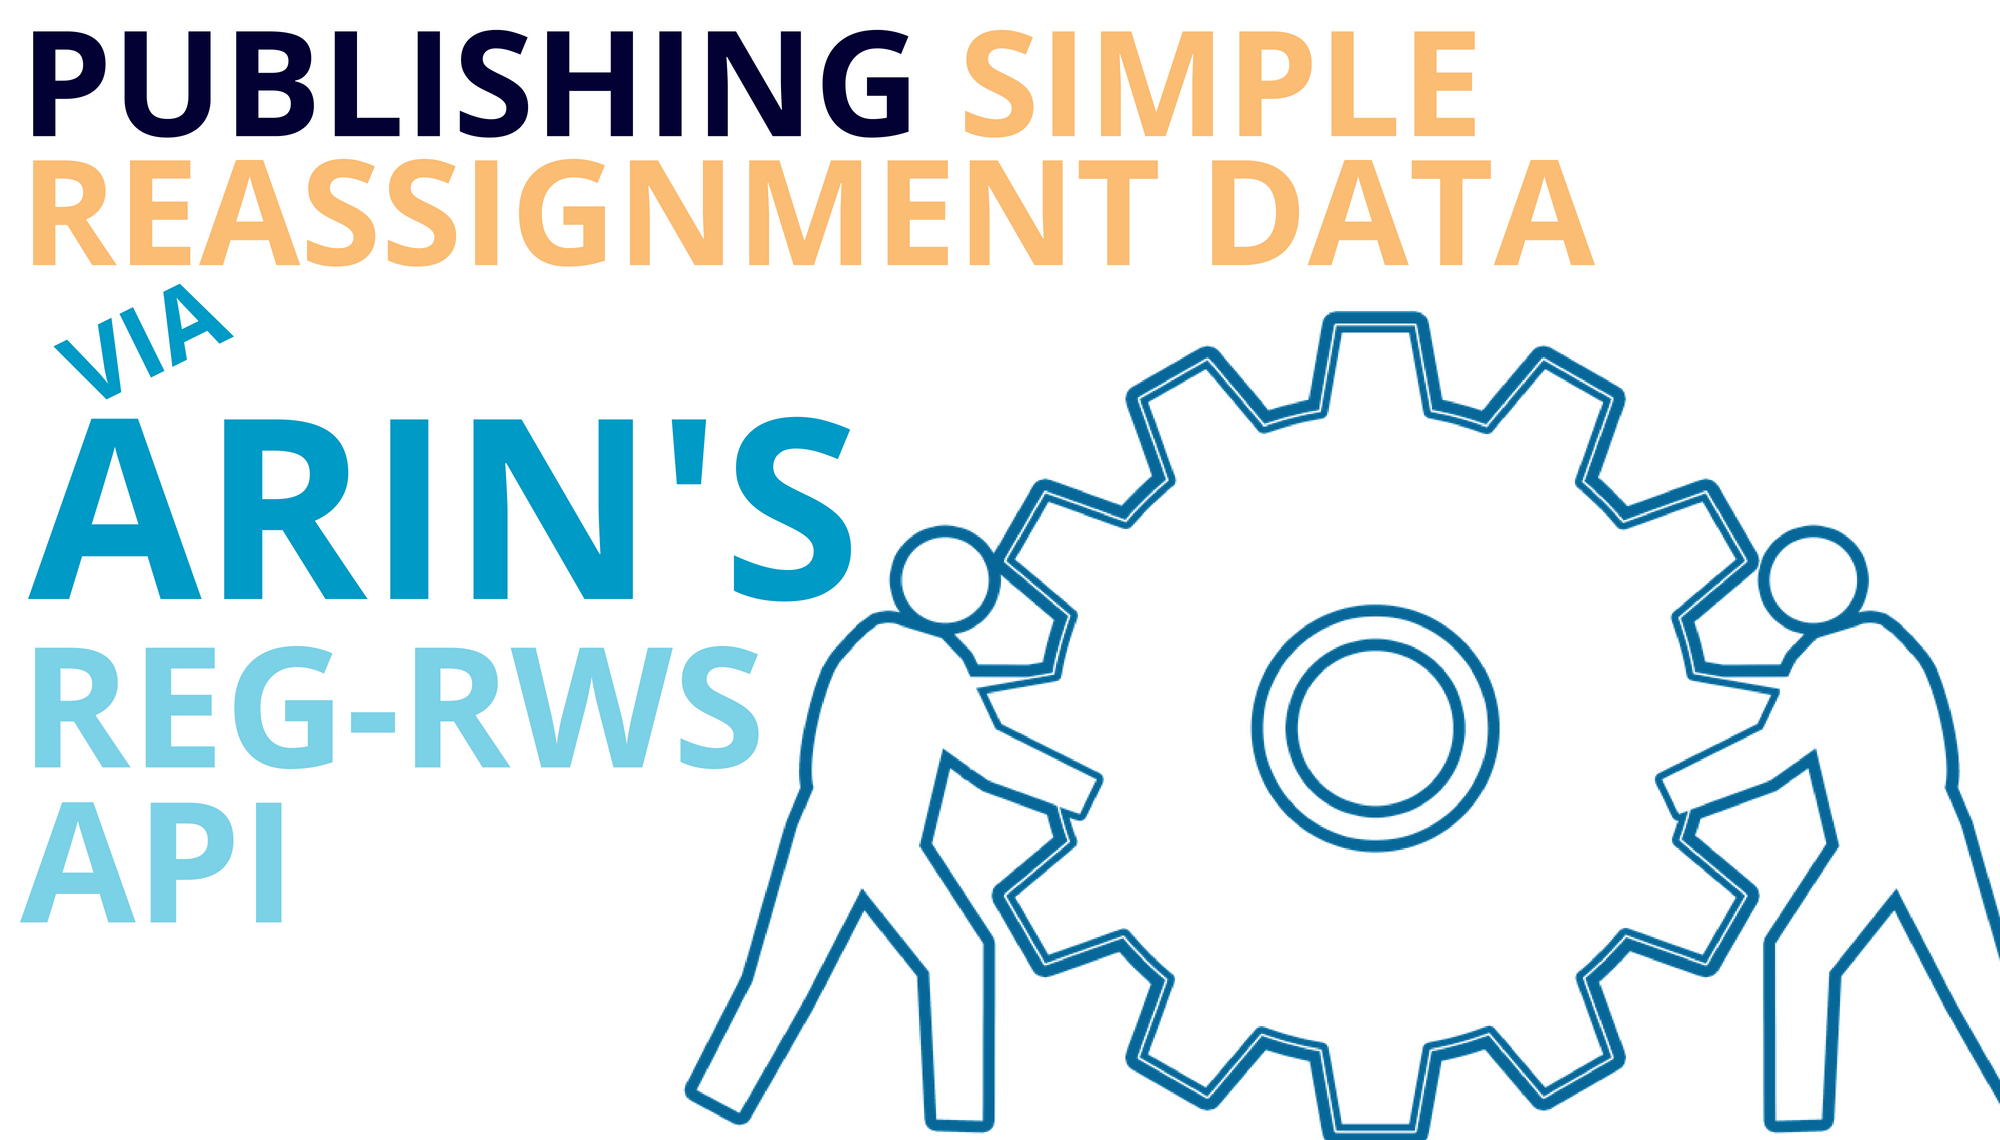 Publishing Simple Reassignment Data Via ARIN’s Reg-RWS API